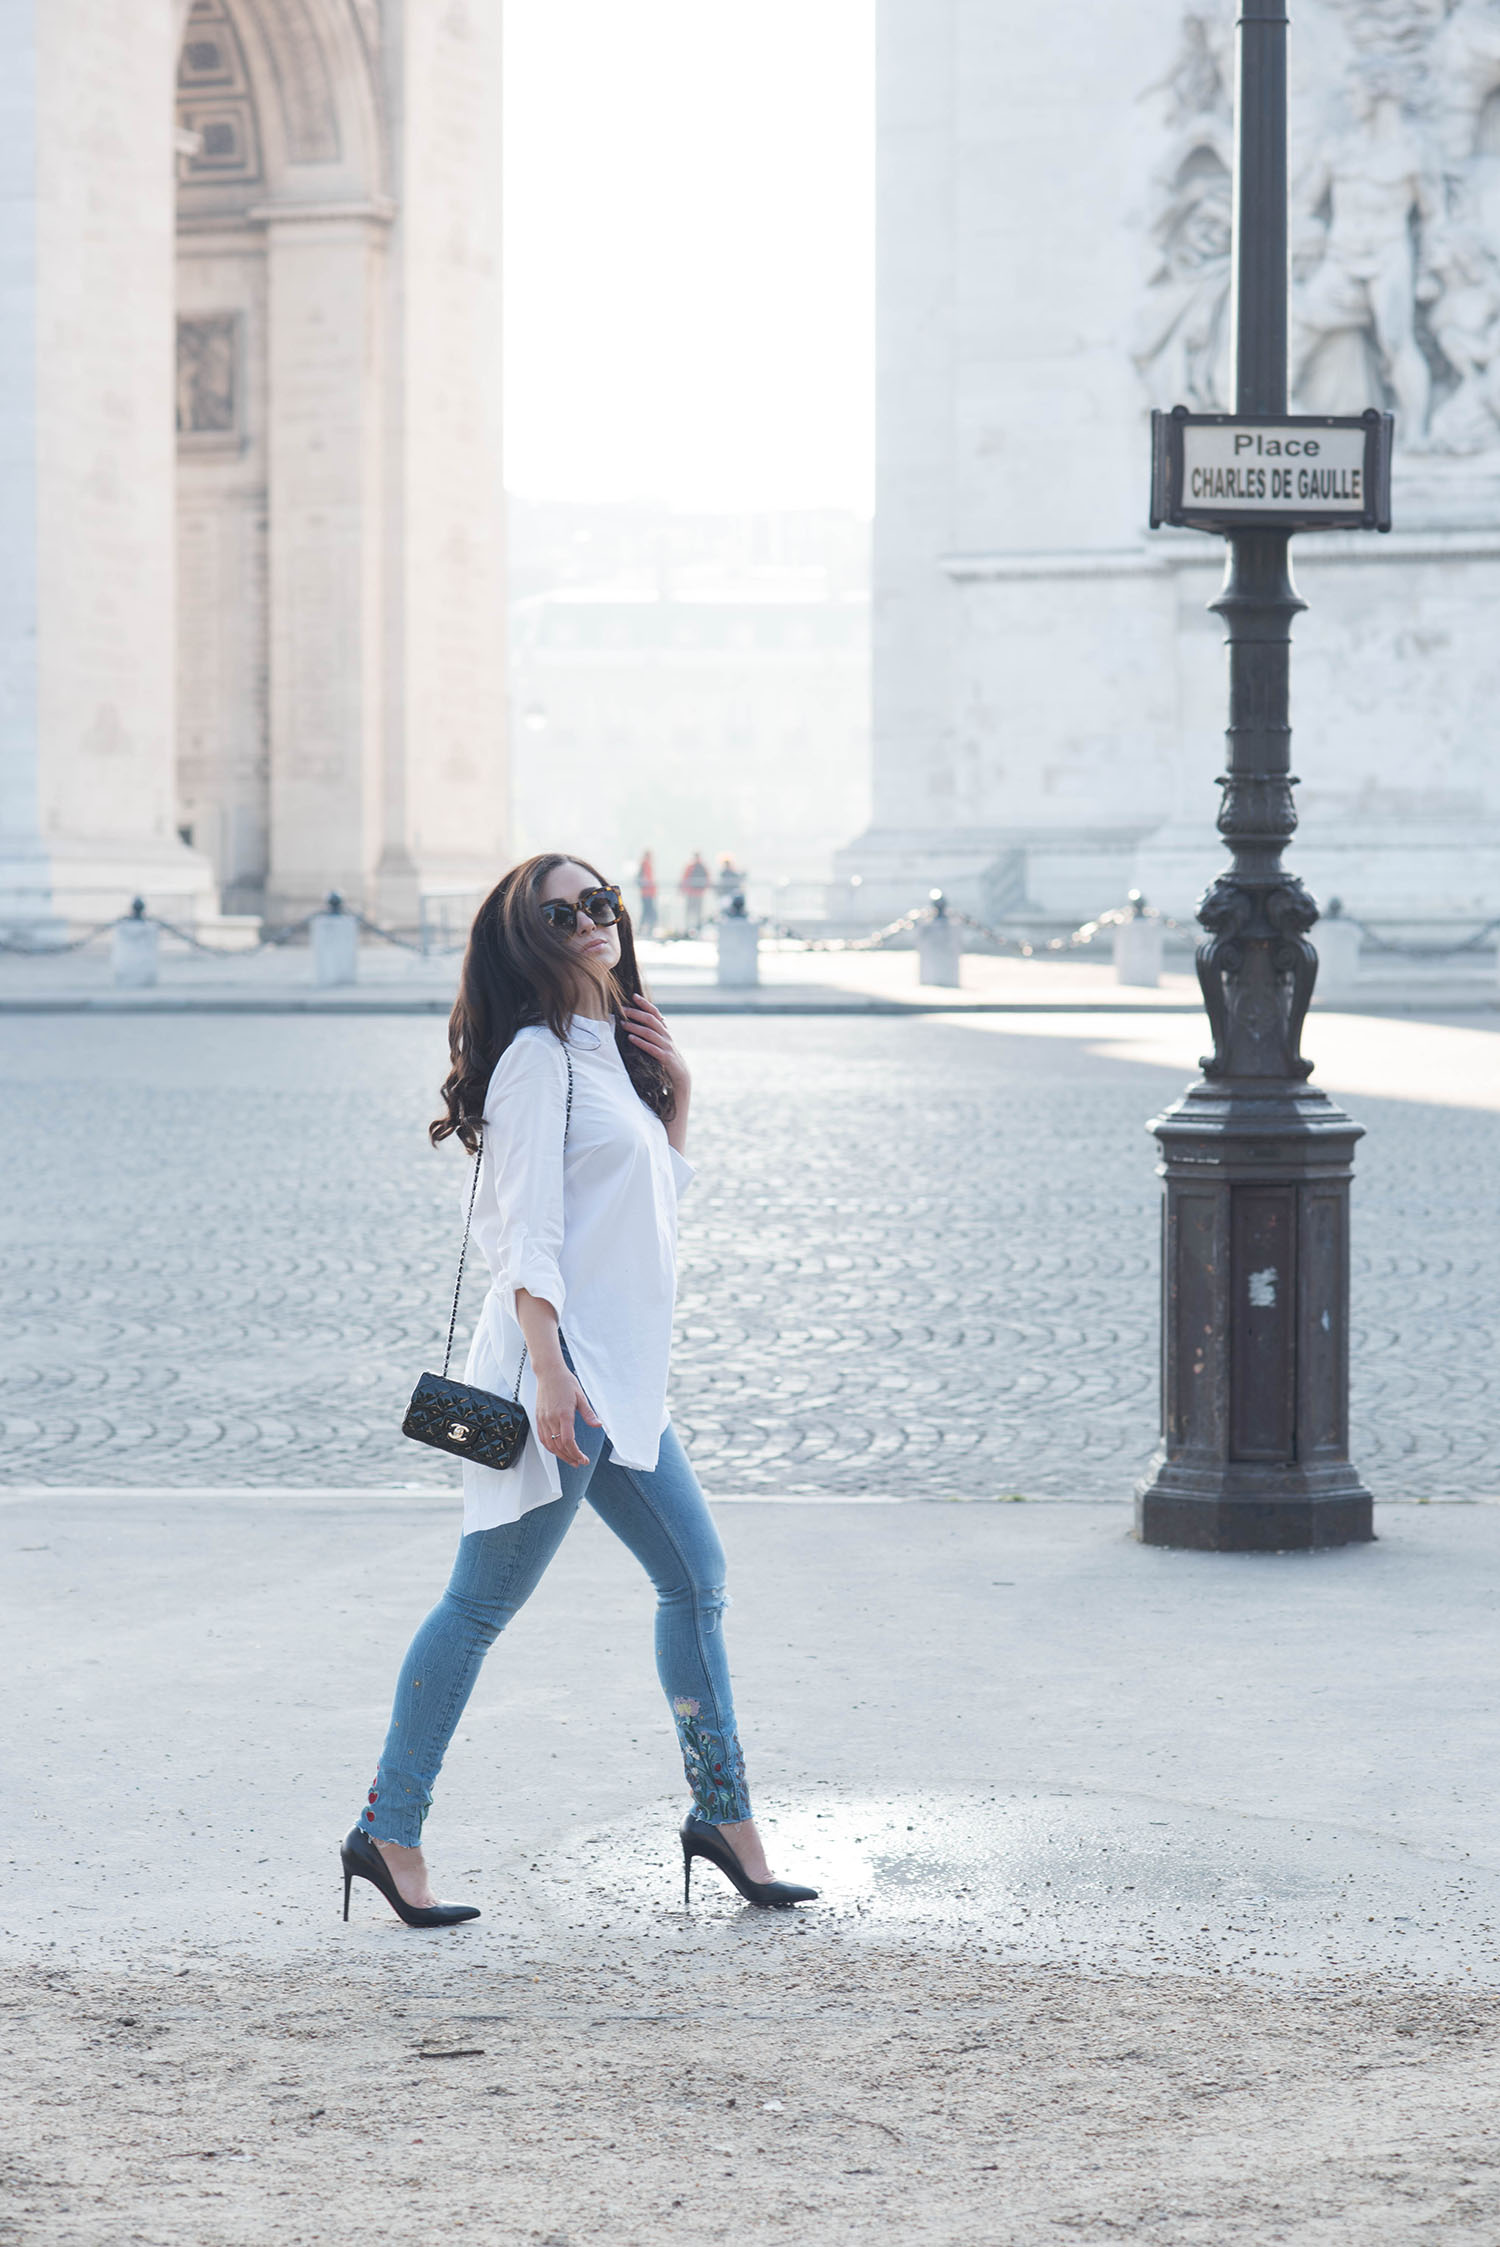 Winnipeg fashion blogger Cee Fardoe of Coco & Vera walks near the Arc de Triomphe in Paris wearing Zara embroidered jeans and carrying a Chanel extra mini handbag